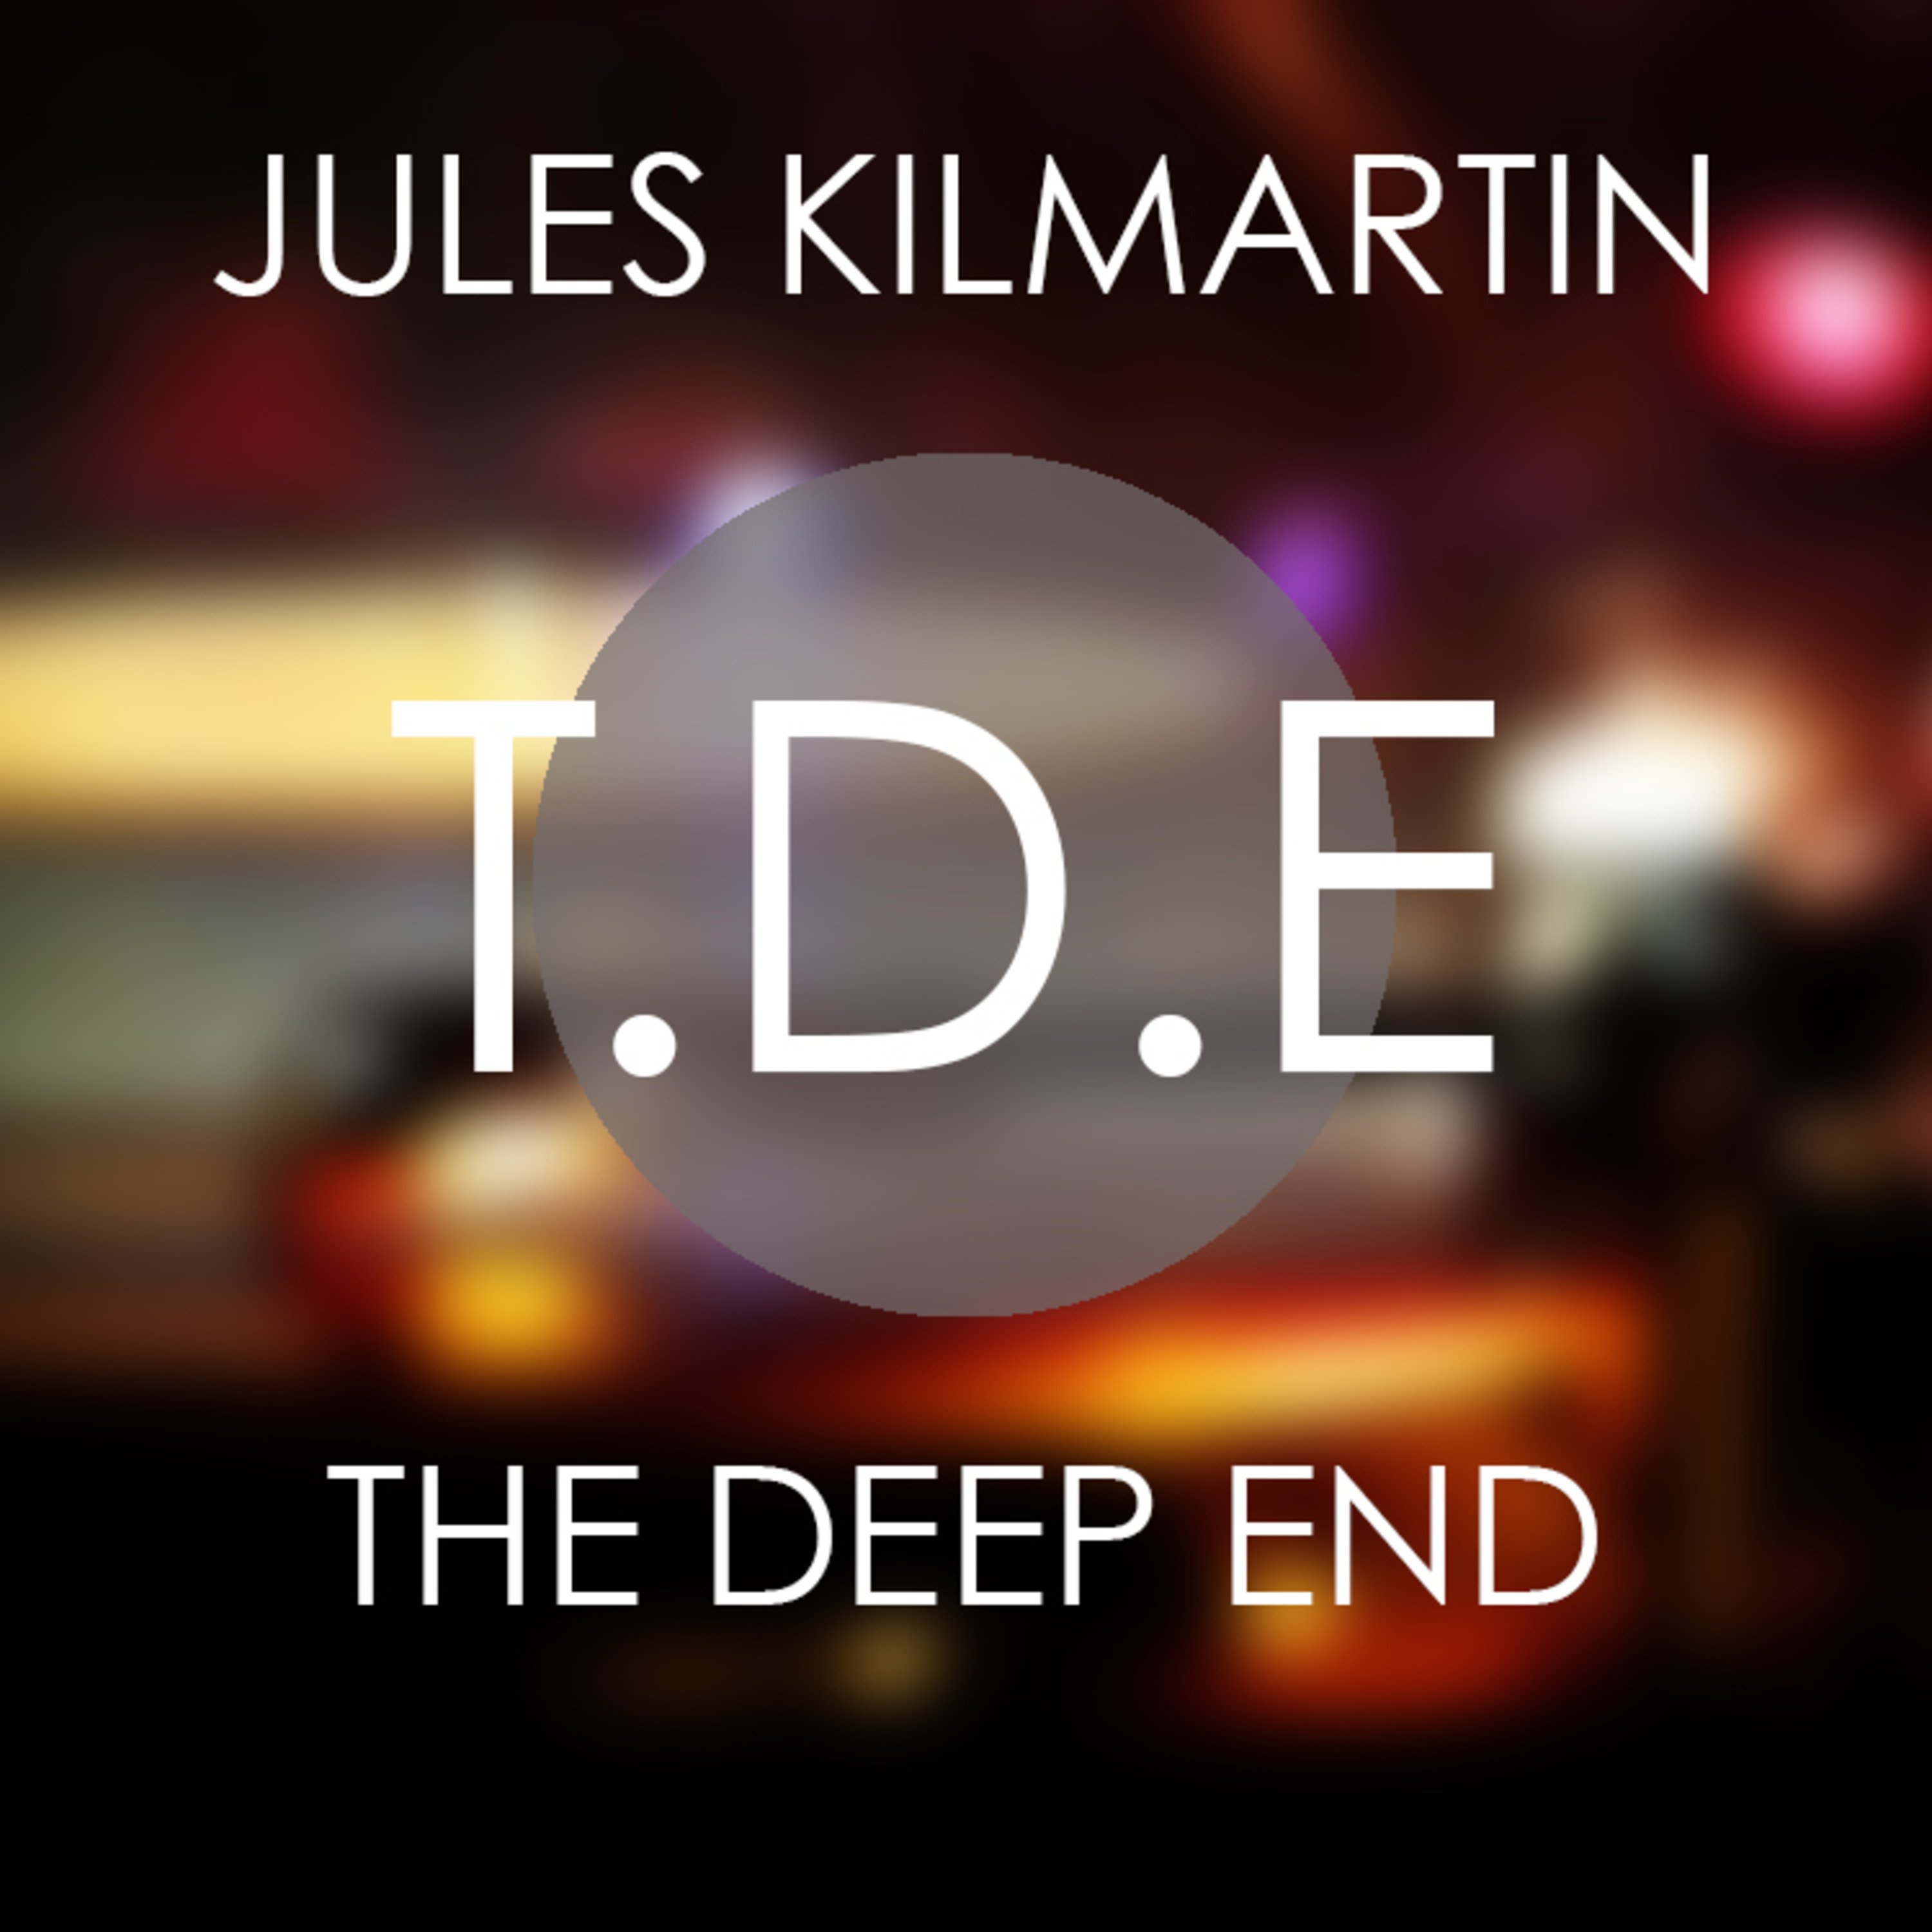 Jules Kilmartin - The Deep End